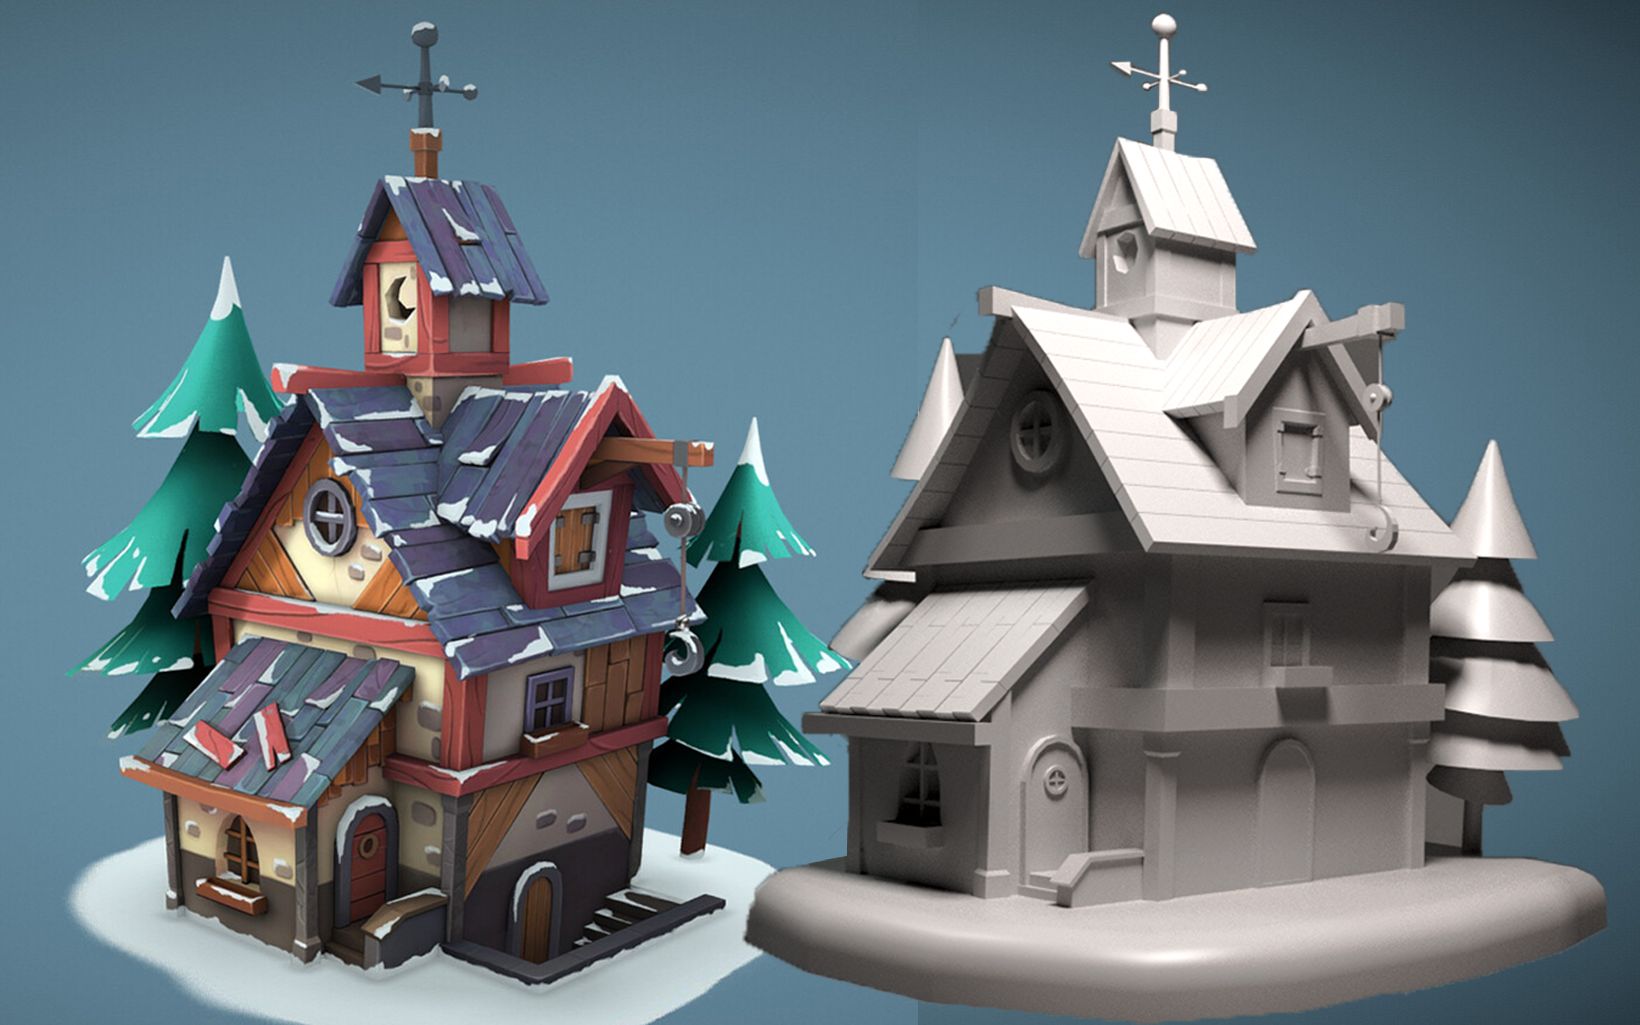 3dmax场景建模:简单冬日3d小房屋模型 渲染全过程讲解(下)